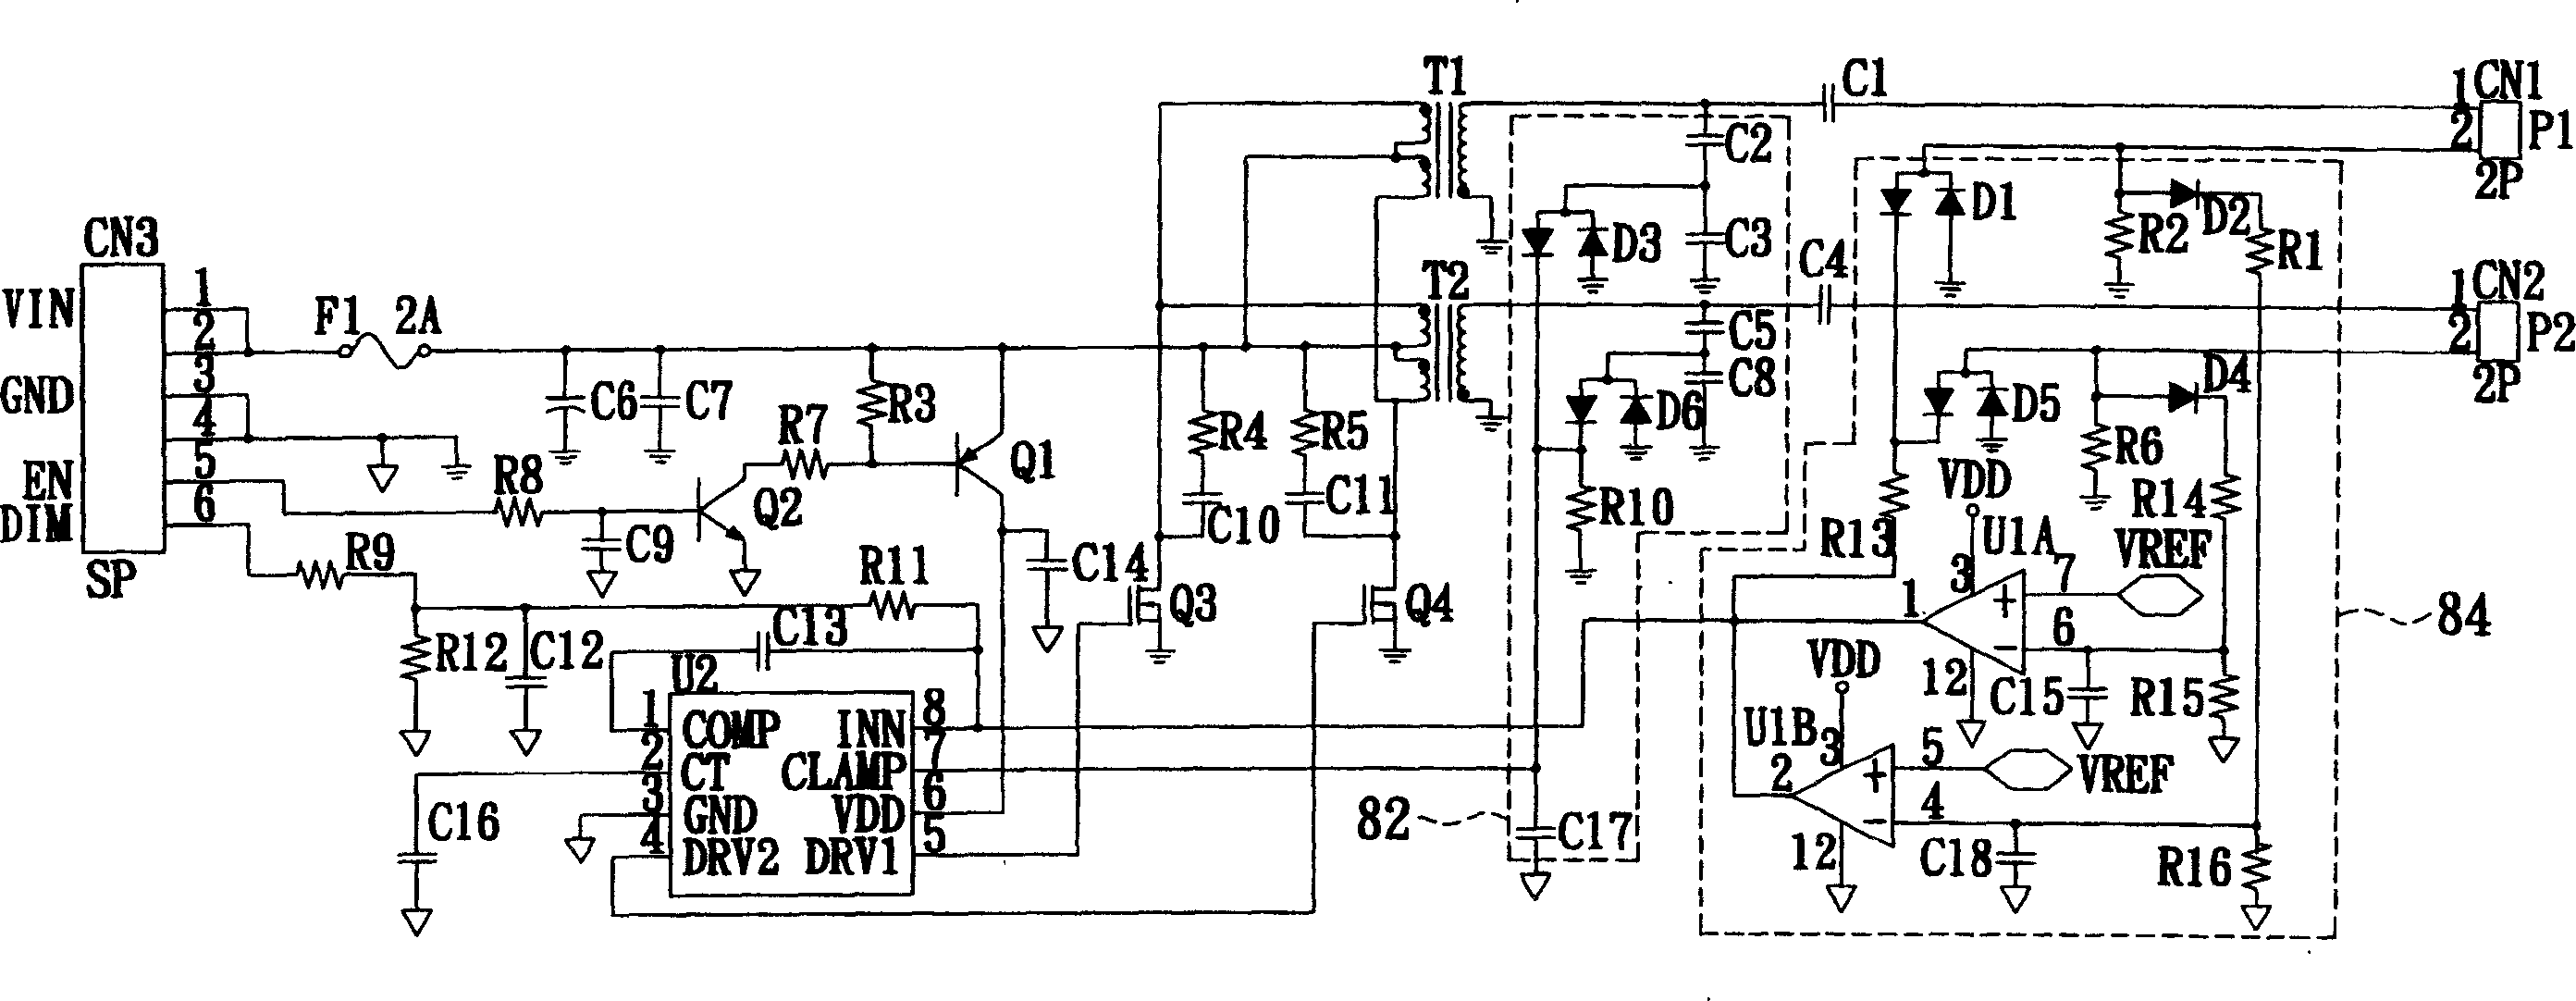 Multi lamp tube control circuit